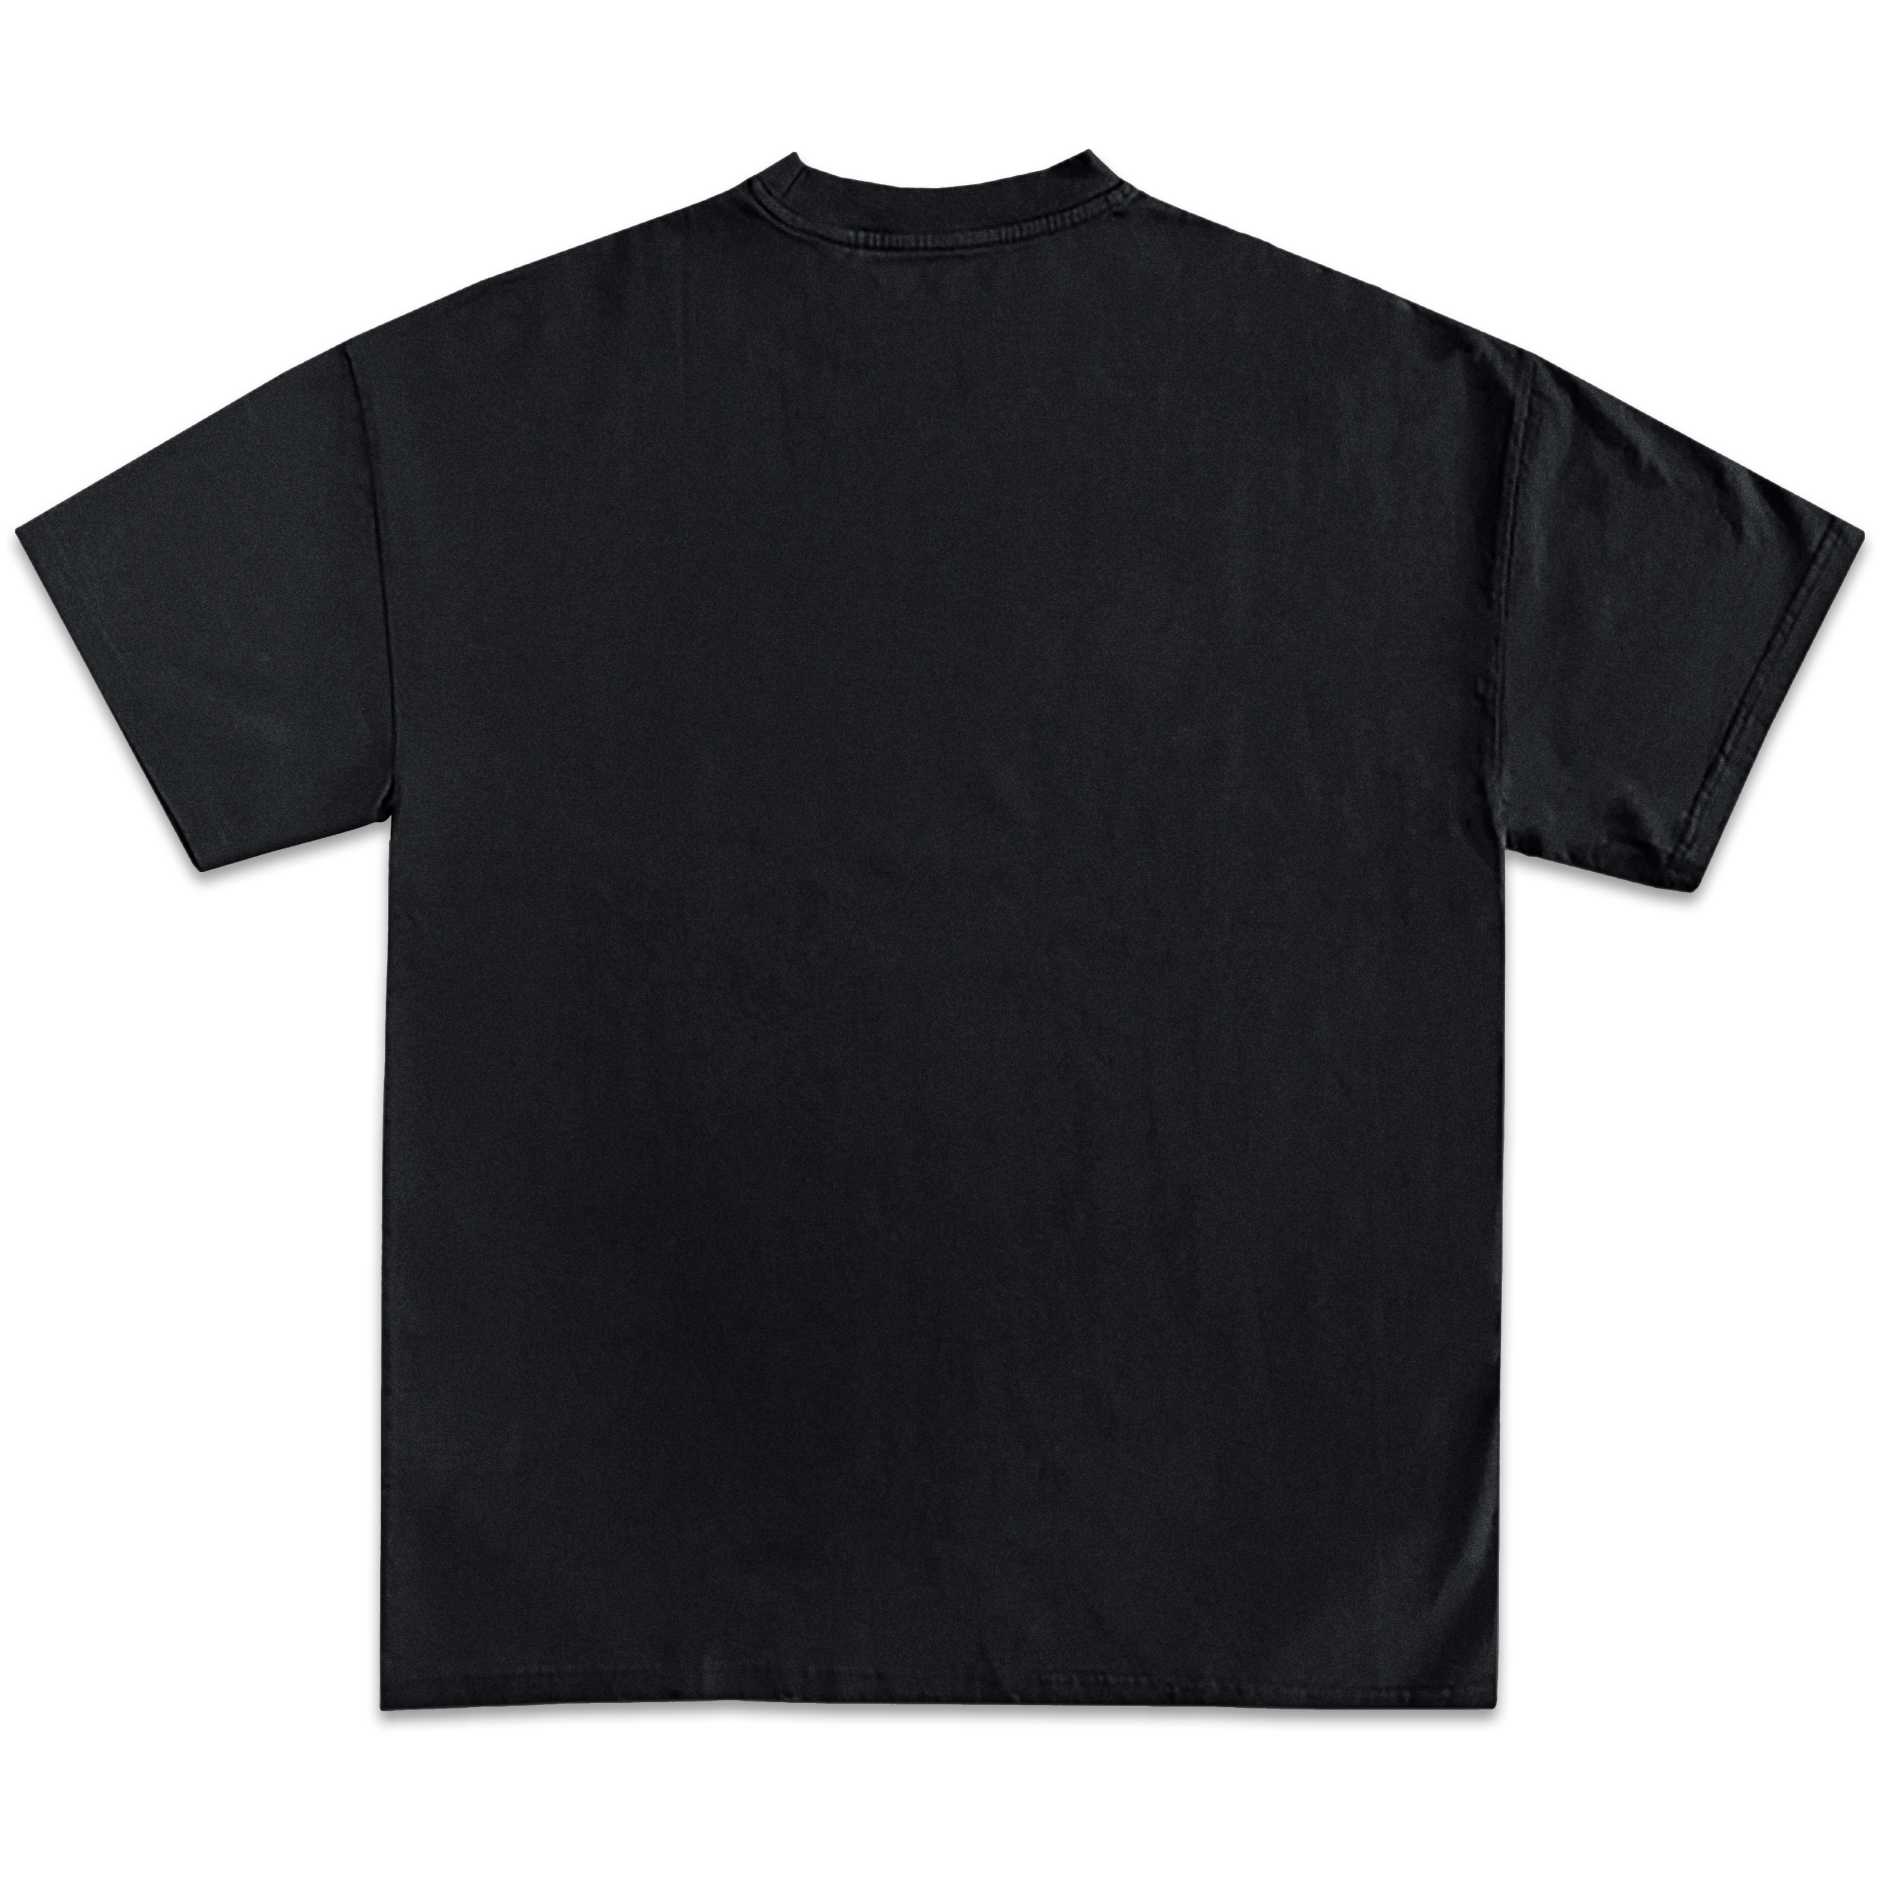 ASAP Rocky Graphic T-Shirt